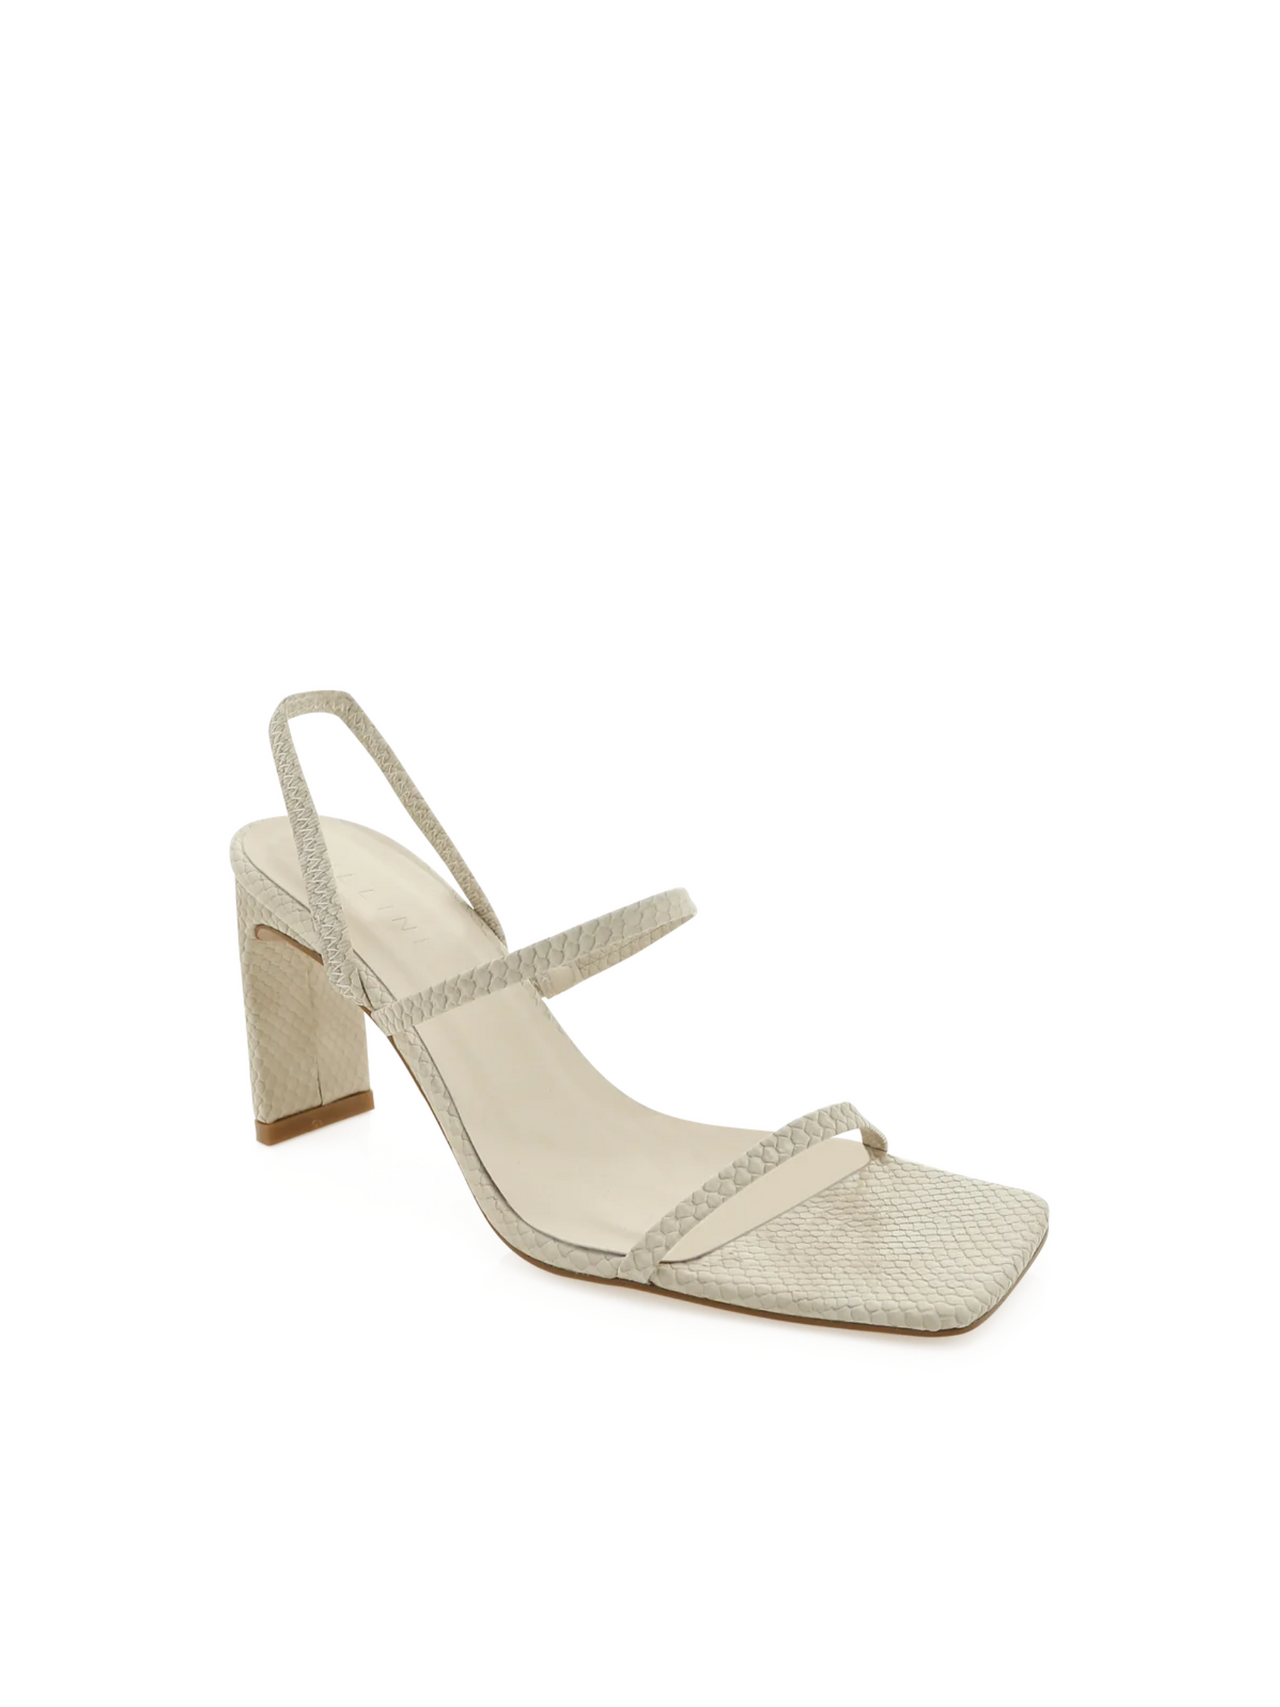 Kera Python Strappy Sandal Cream, Heel Shoe by Billini | LIT Boutique